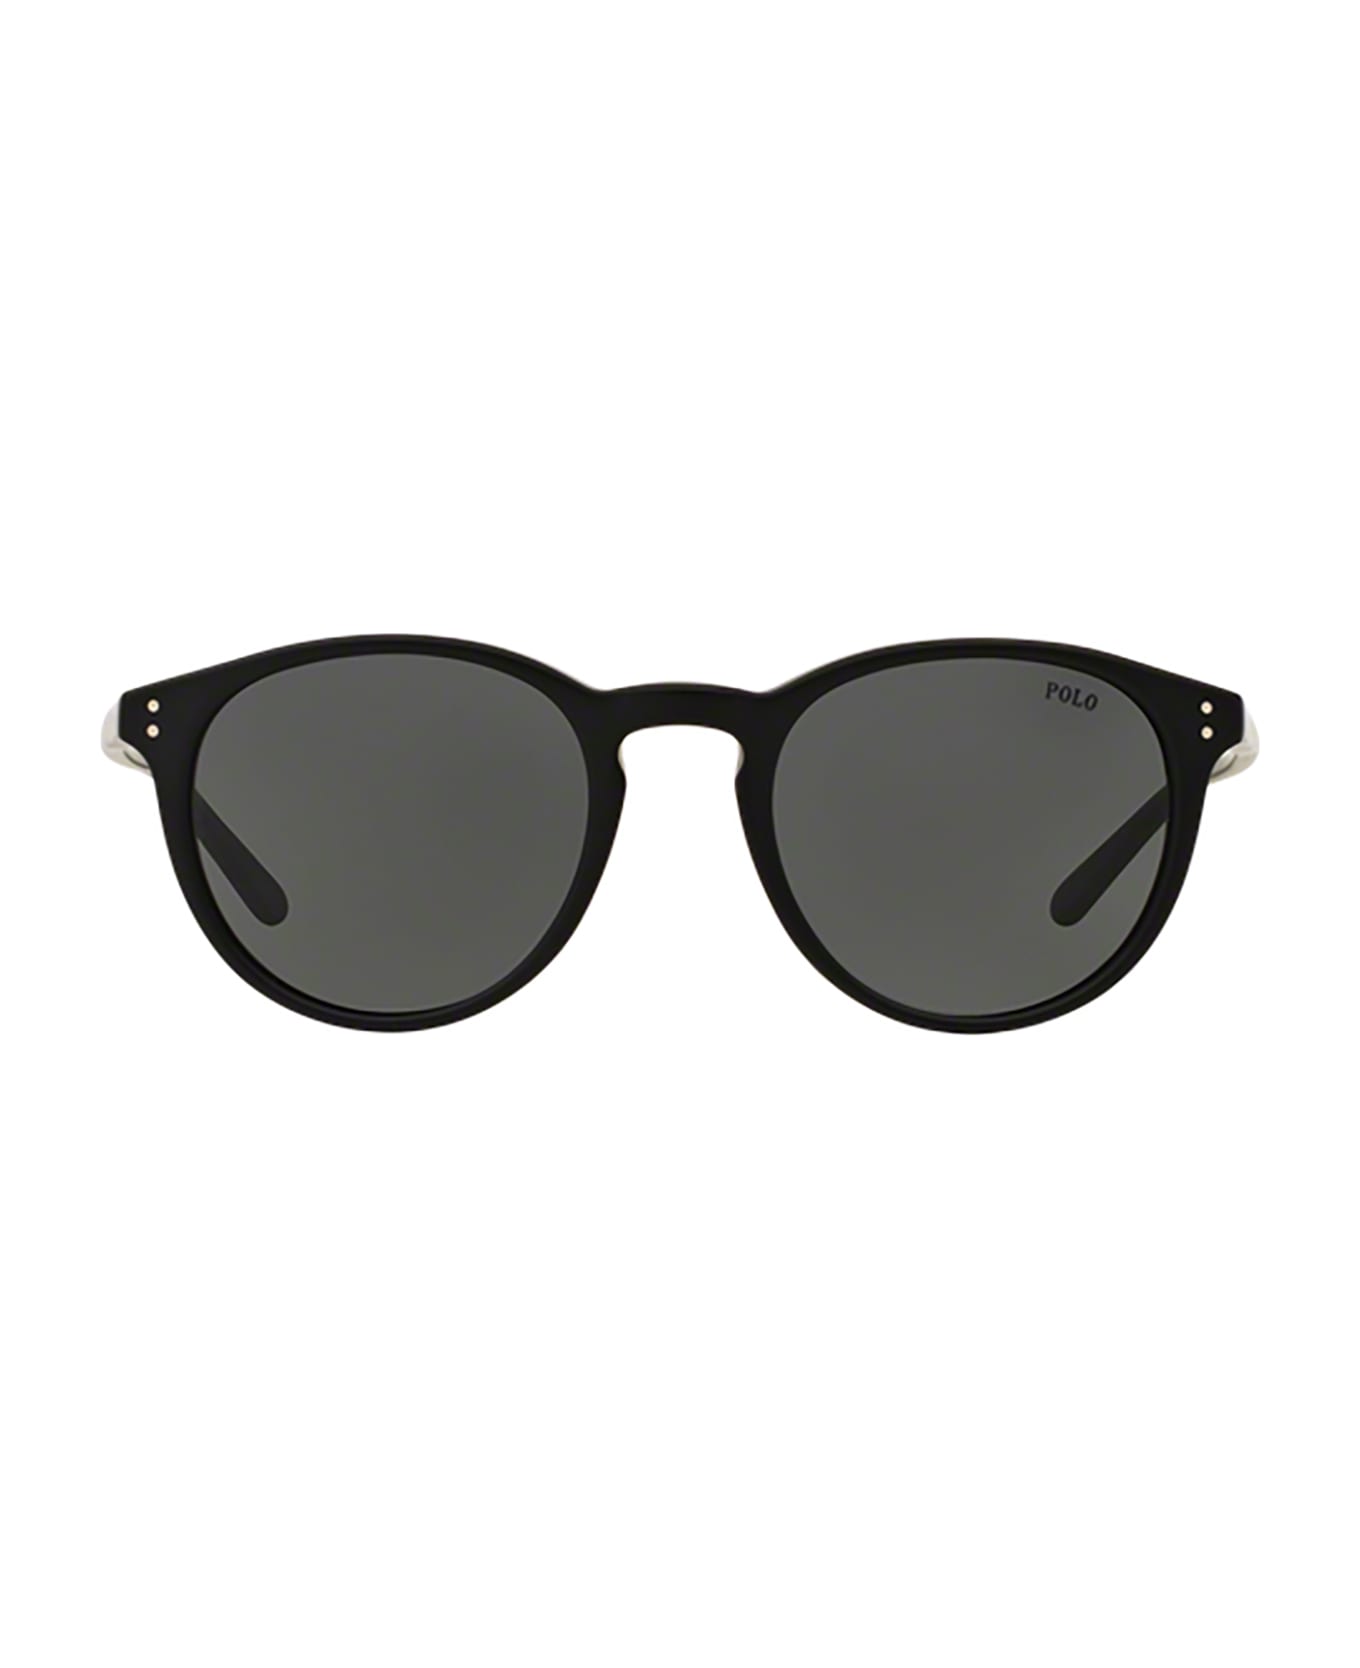 Polo Ralph Lauren Ph4110 Matte Black Sunglasses - MATTE BLACK